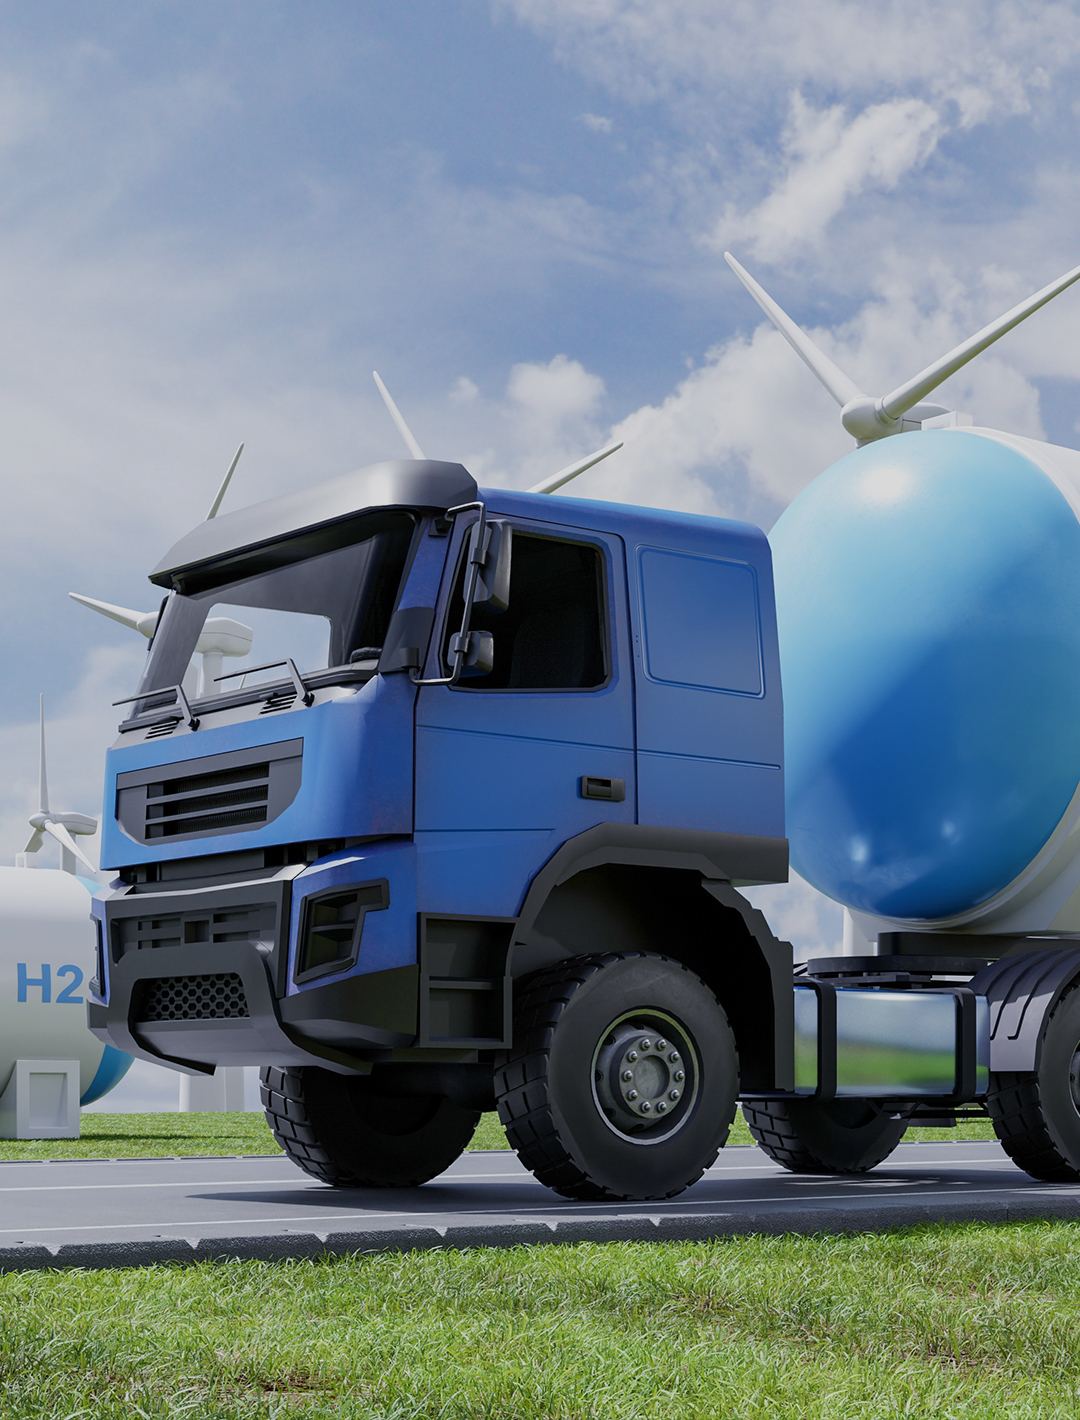 Hydrogen trucks and wind power generators Image